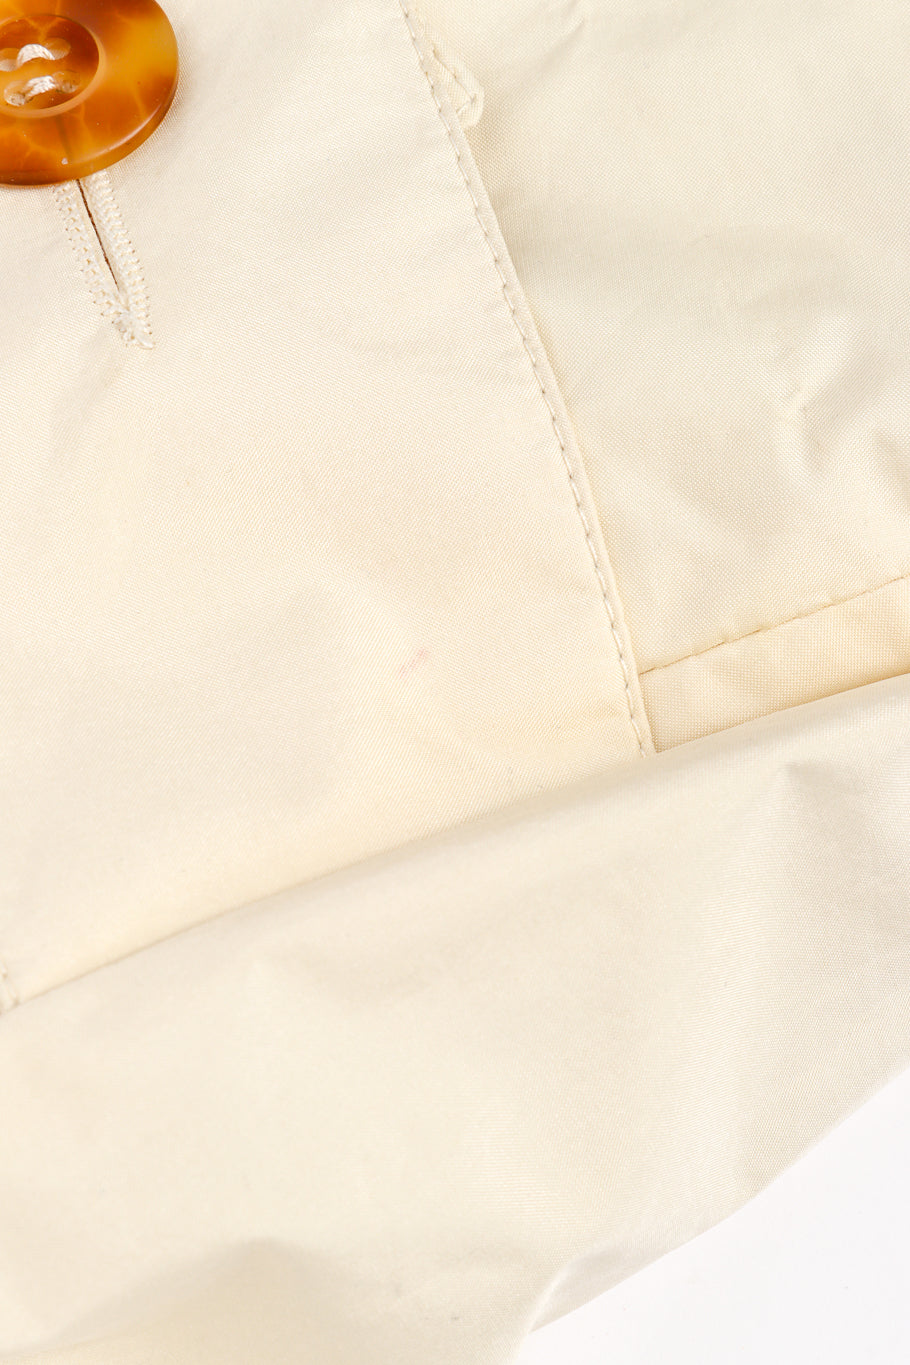 Vintage Hermés Silk Trench Coat stain at wrist strap @recess la